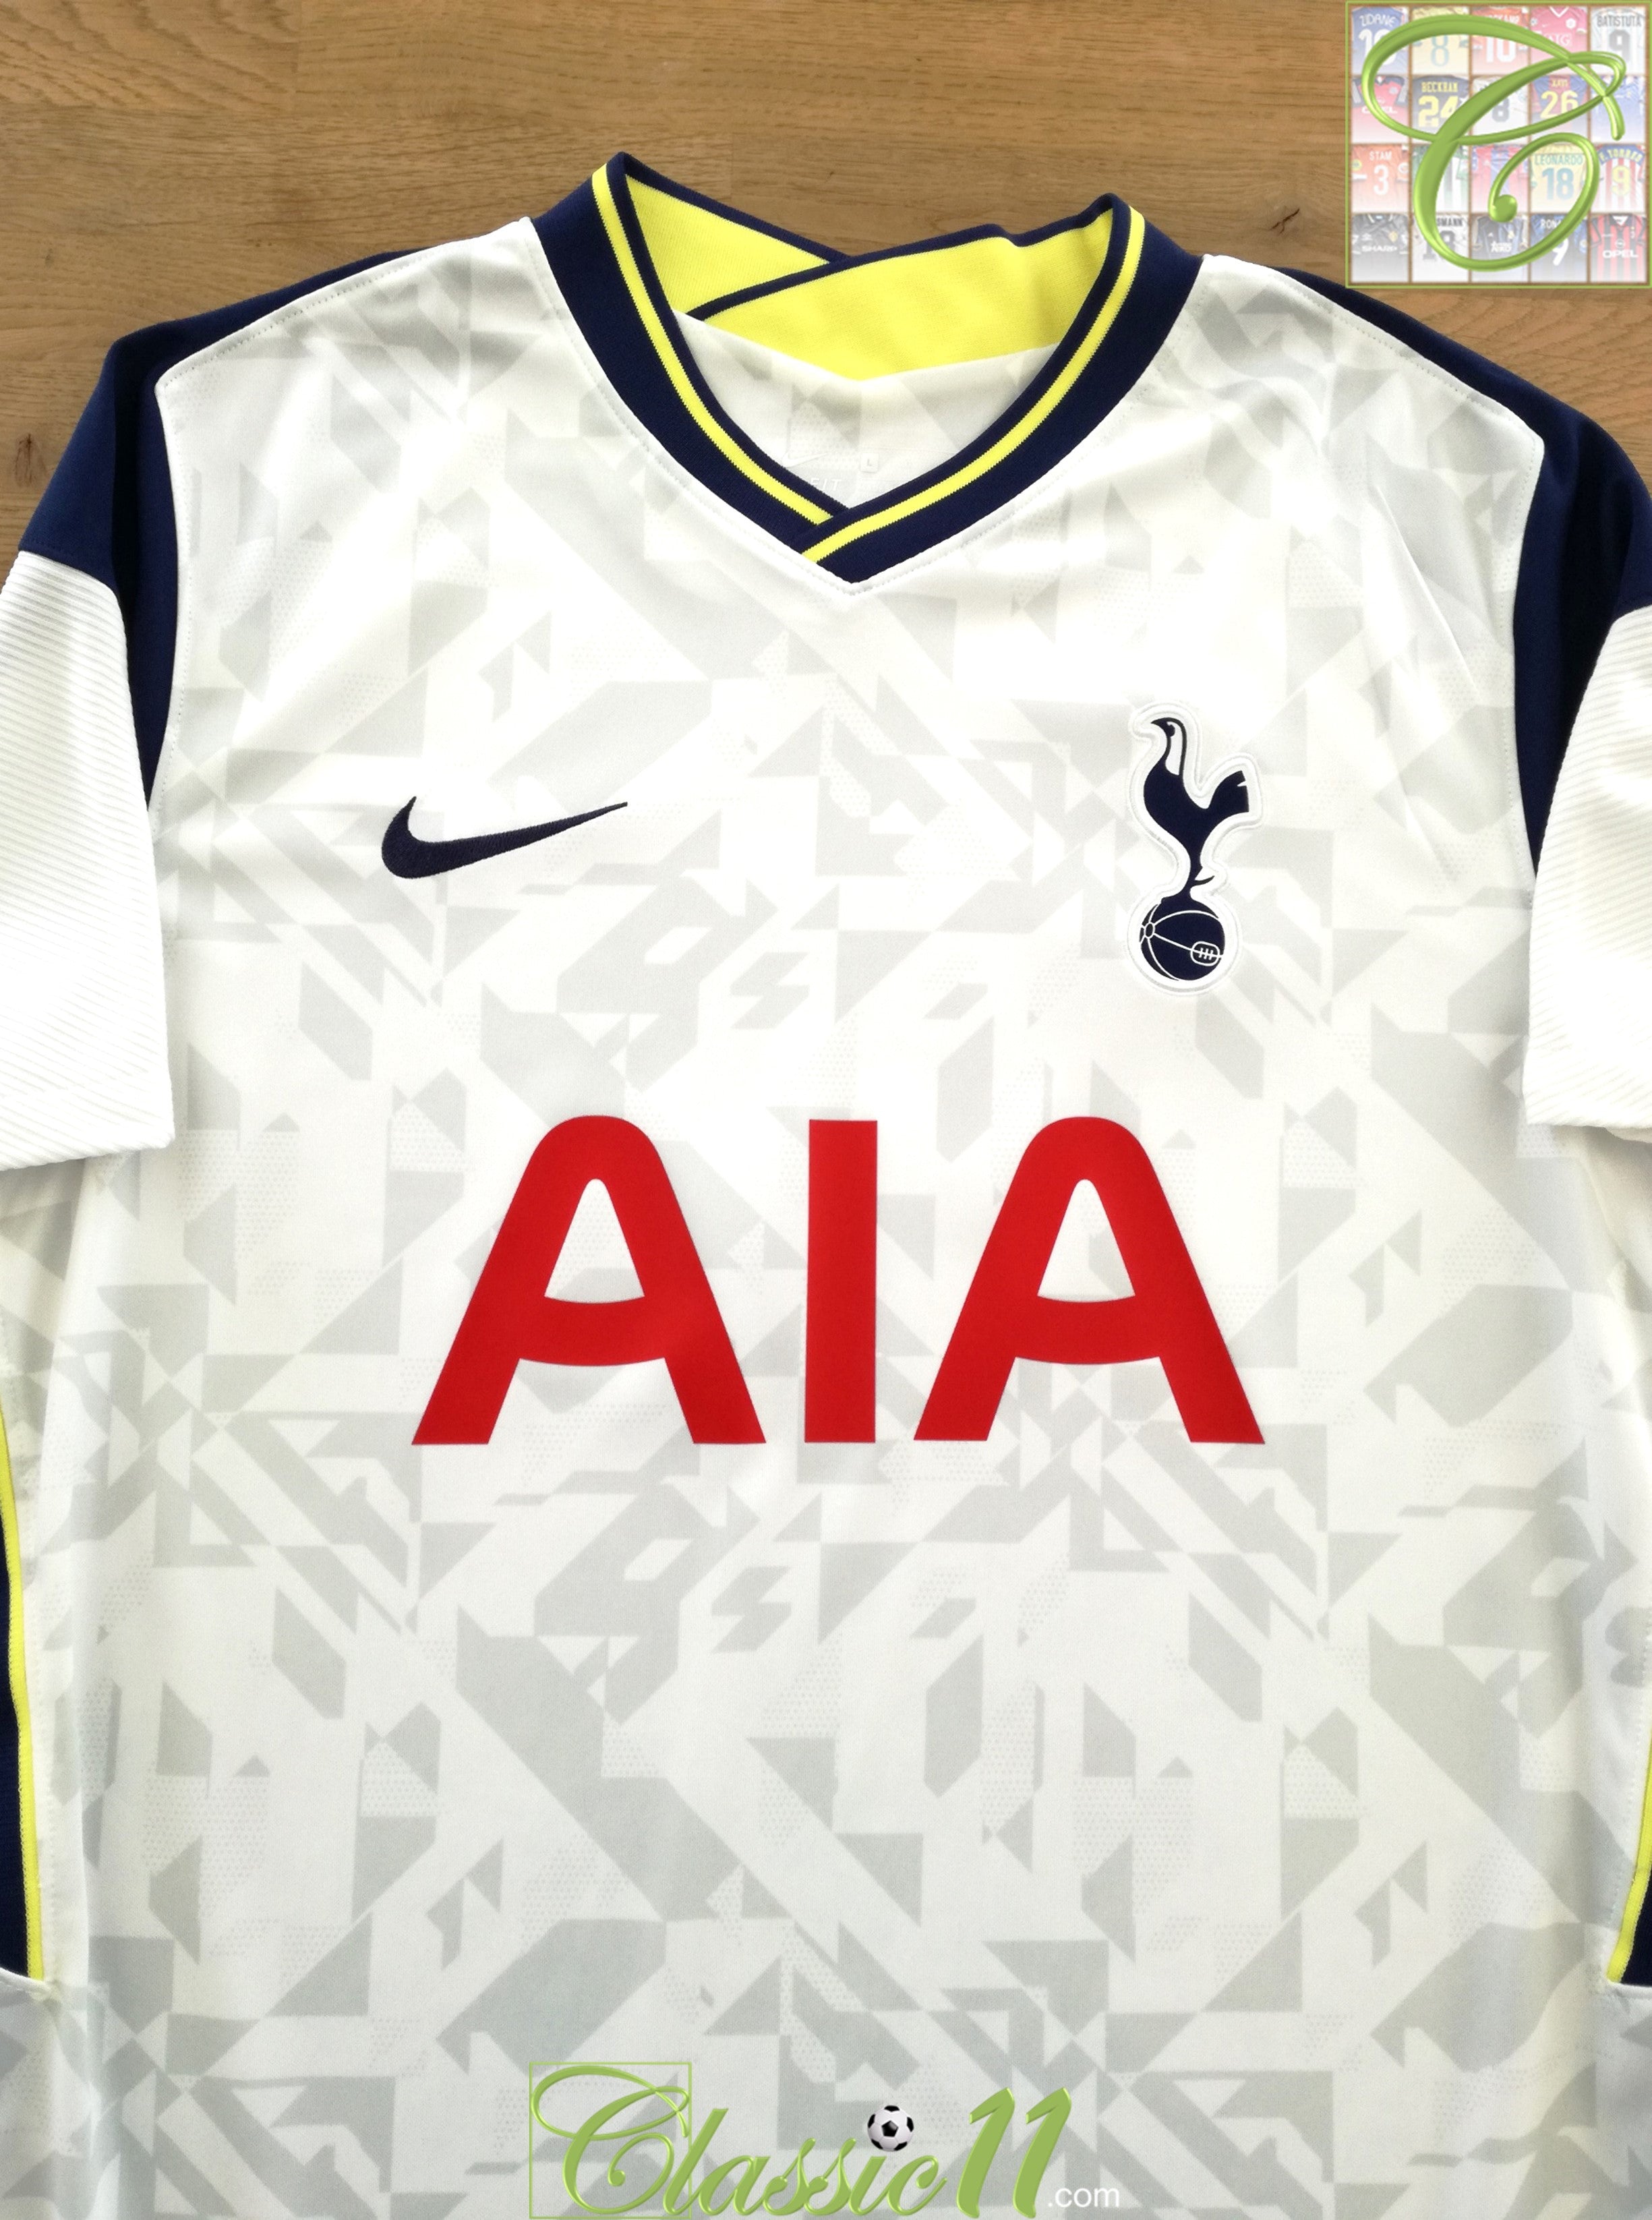 Official Nike Tottenham Hotspur Home Goalkeeper Shirt 2020/21 Available Now